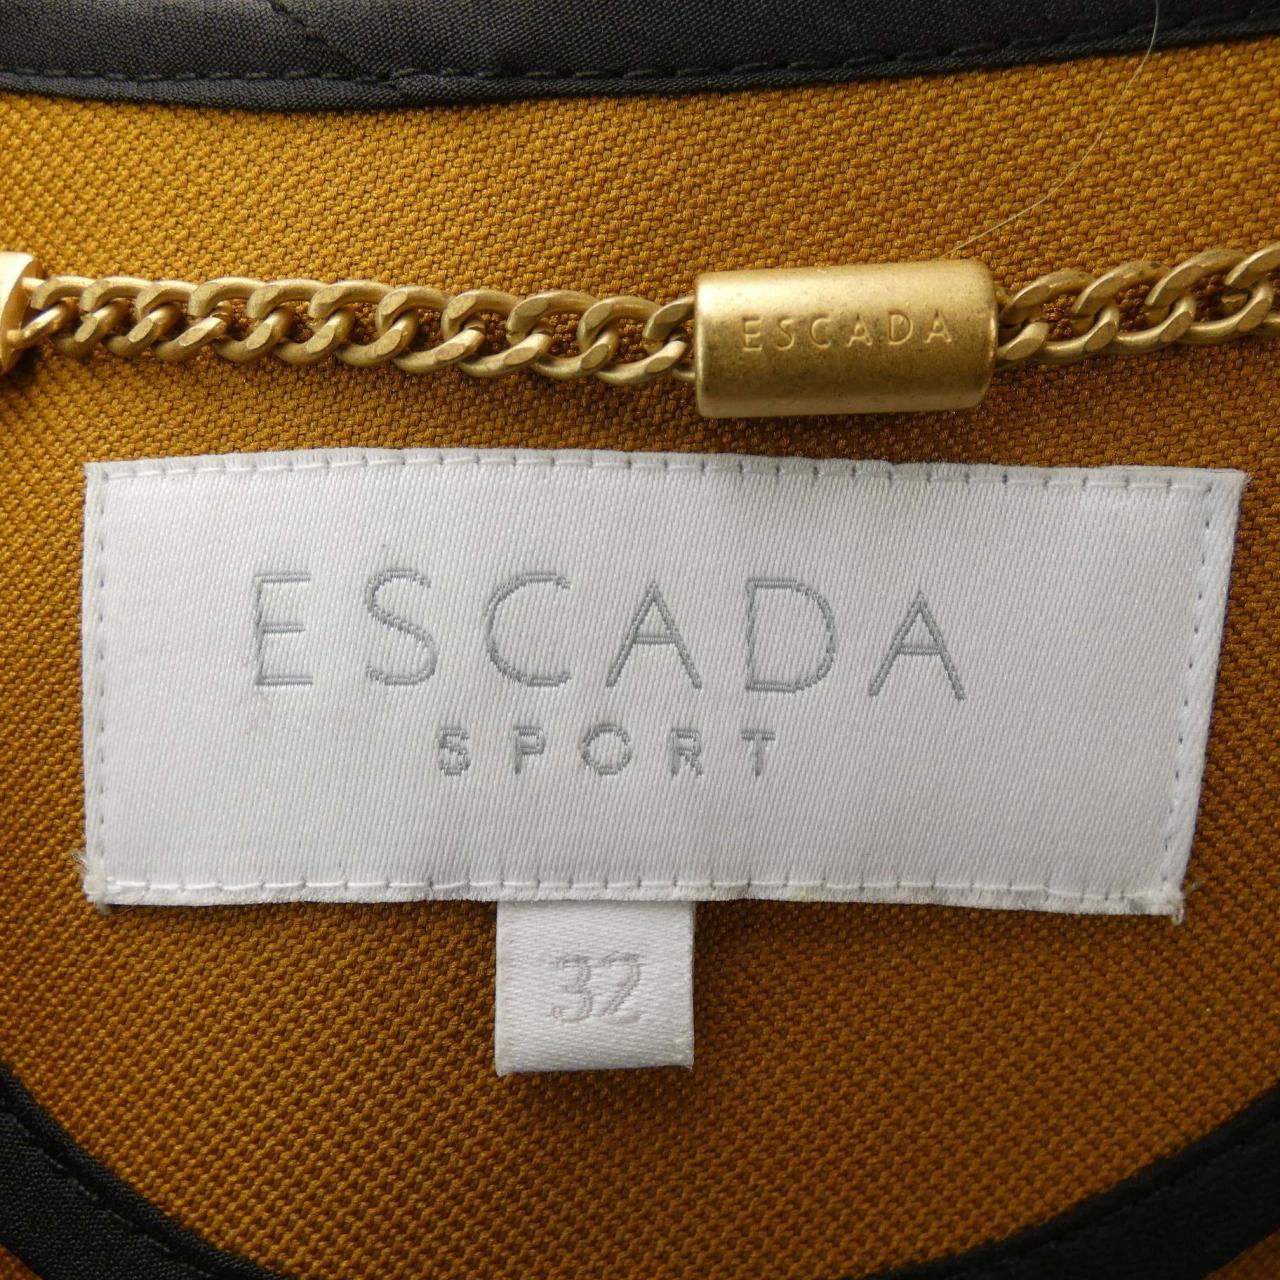 ESCADA SPORT SPORT coat